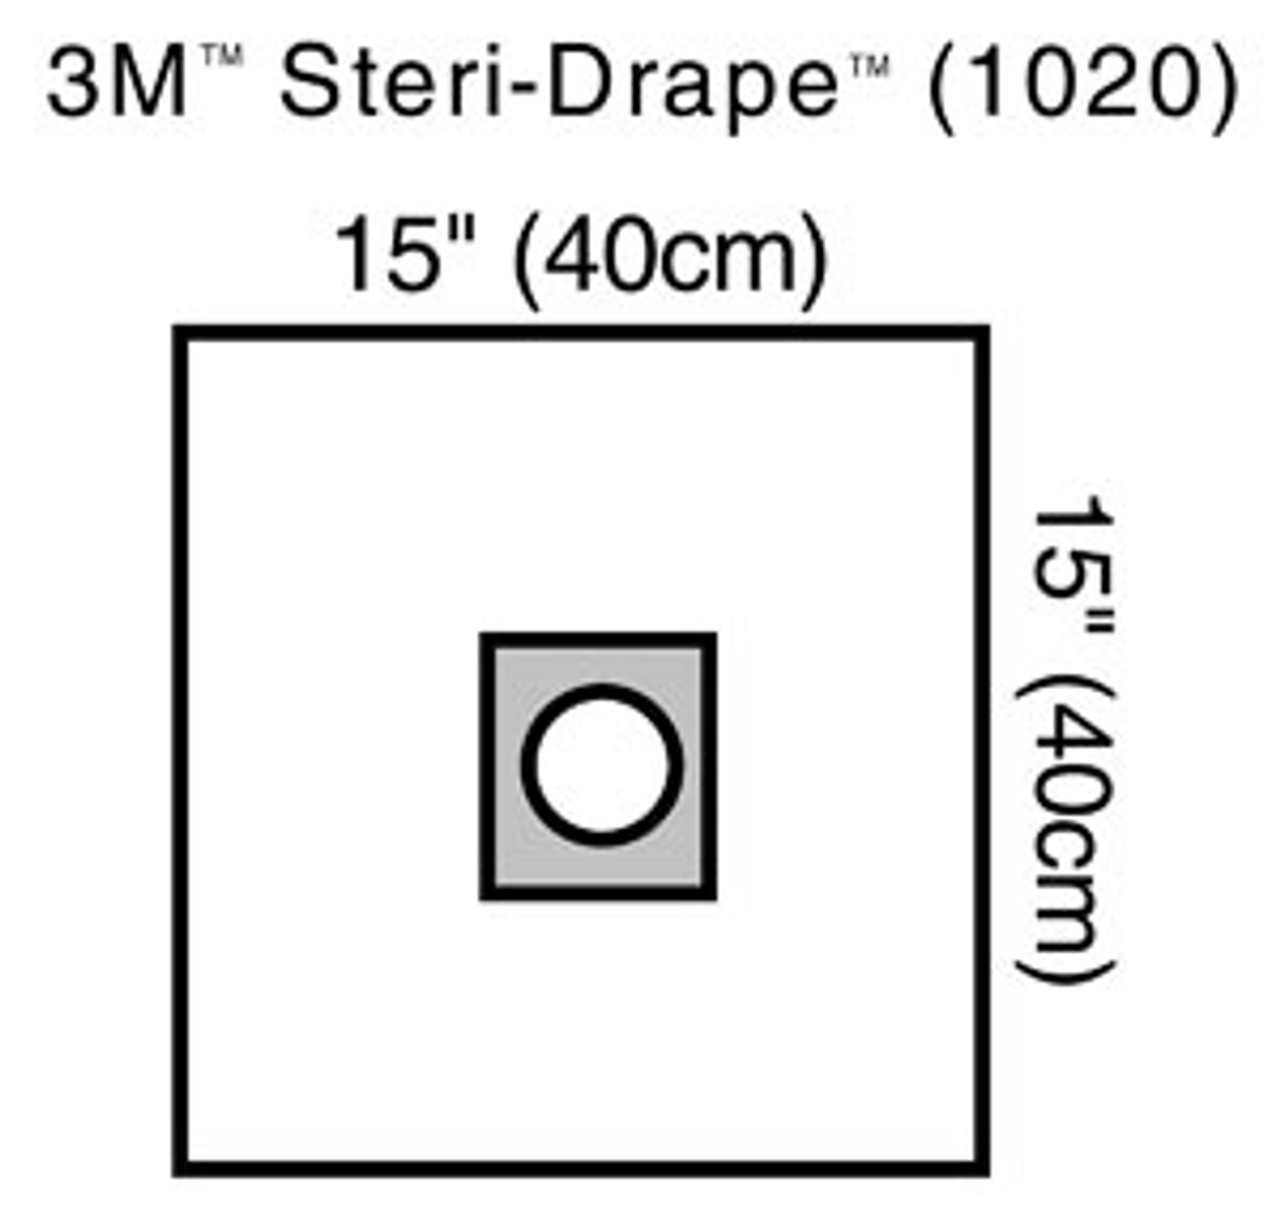 3M STERI-DRAPE OPHTHALMIC SURGICAL DRAPES, 1020